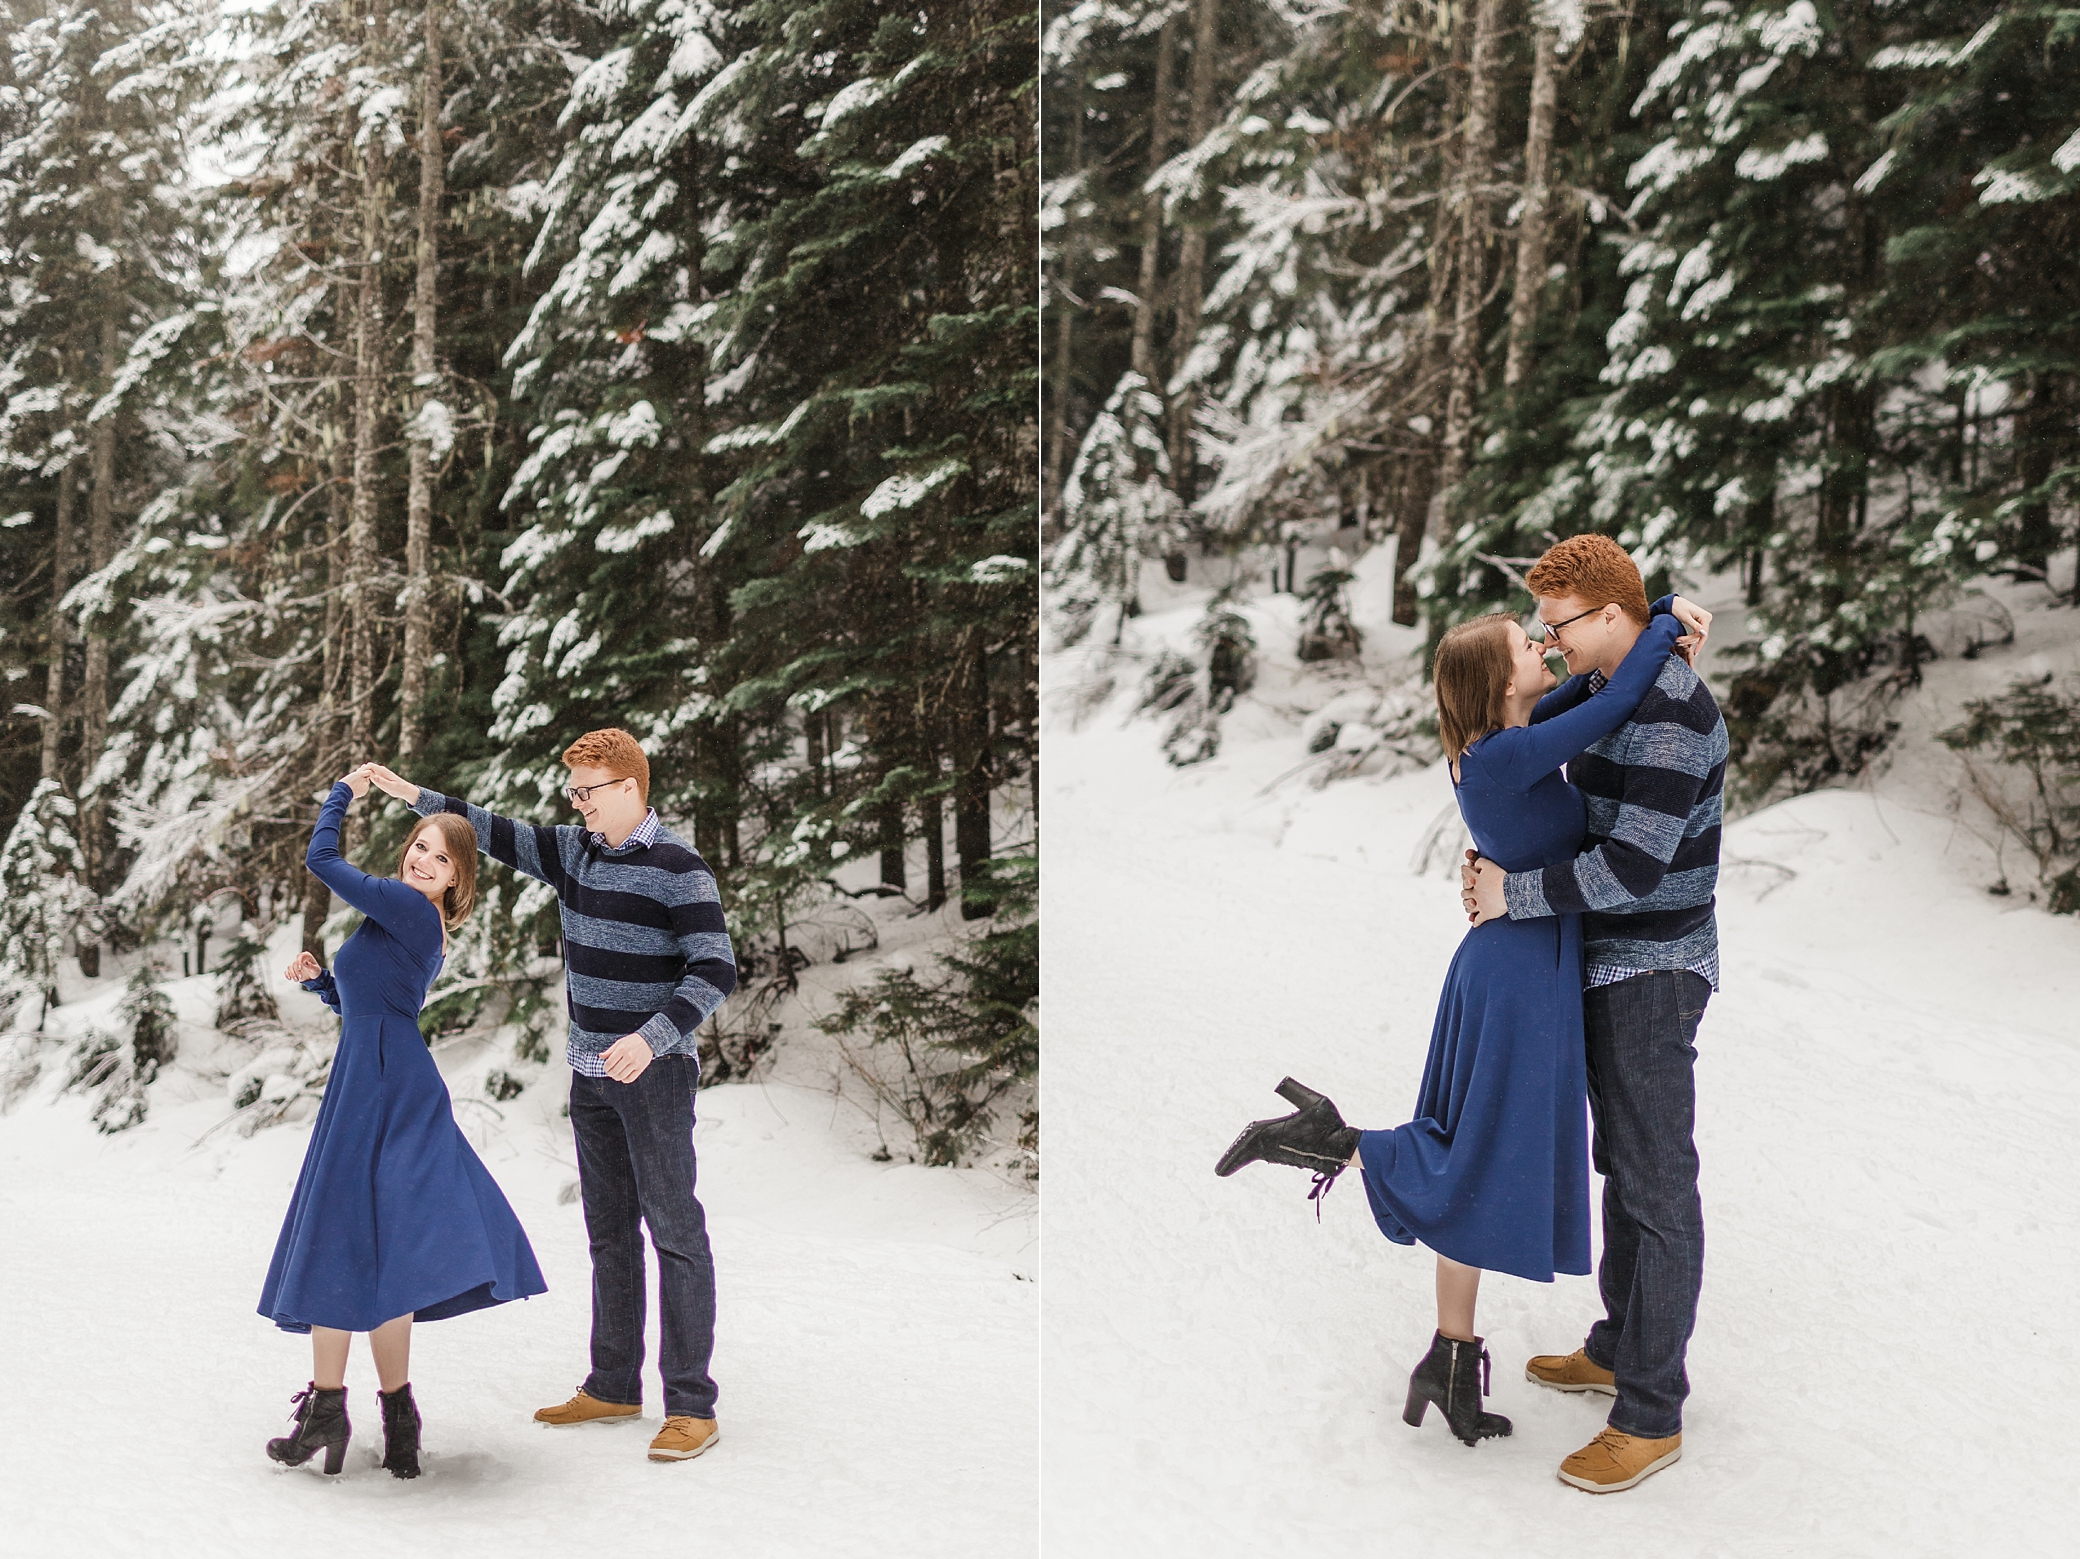 Dancing in the snow | Megan Montalvo Photography